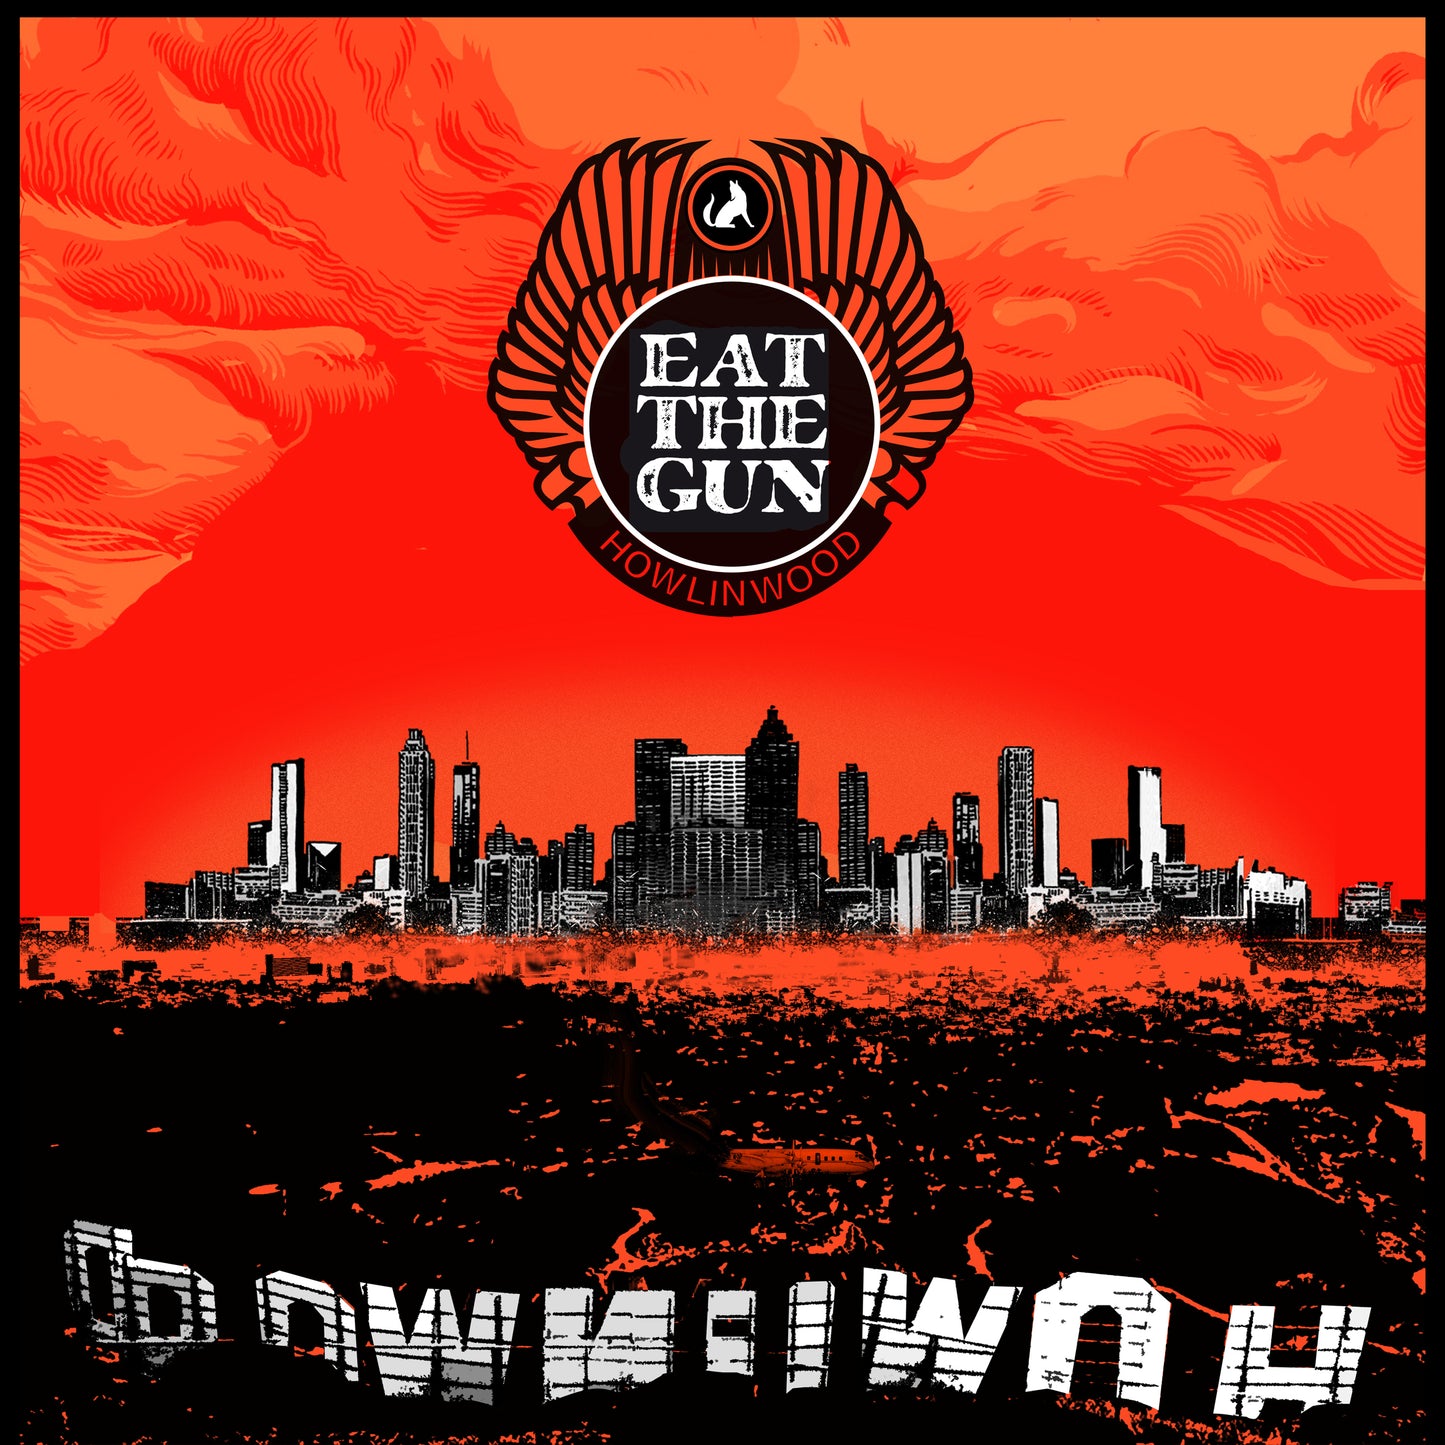 Eat The Gun "Howlinwood" LP